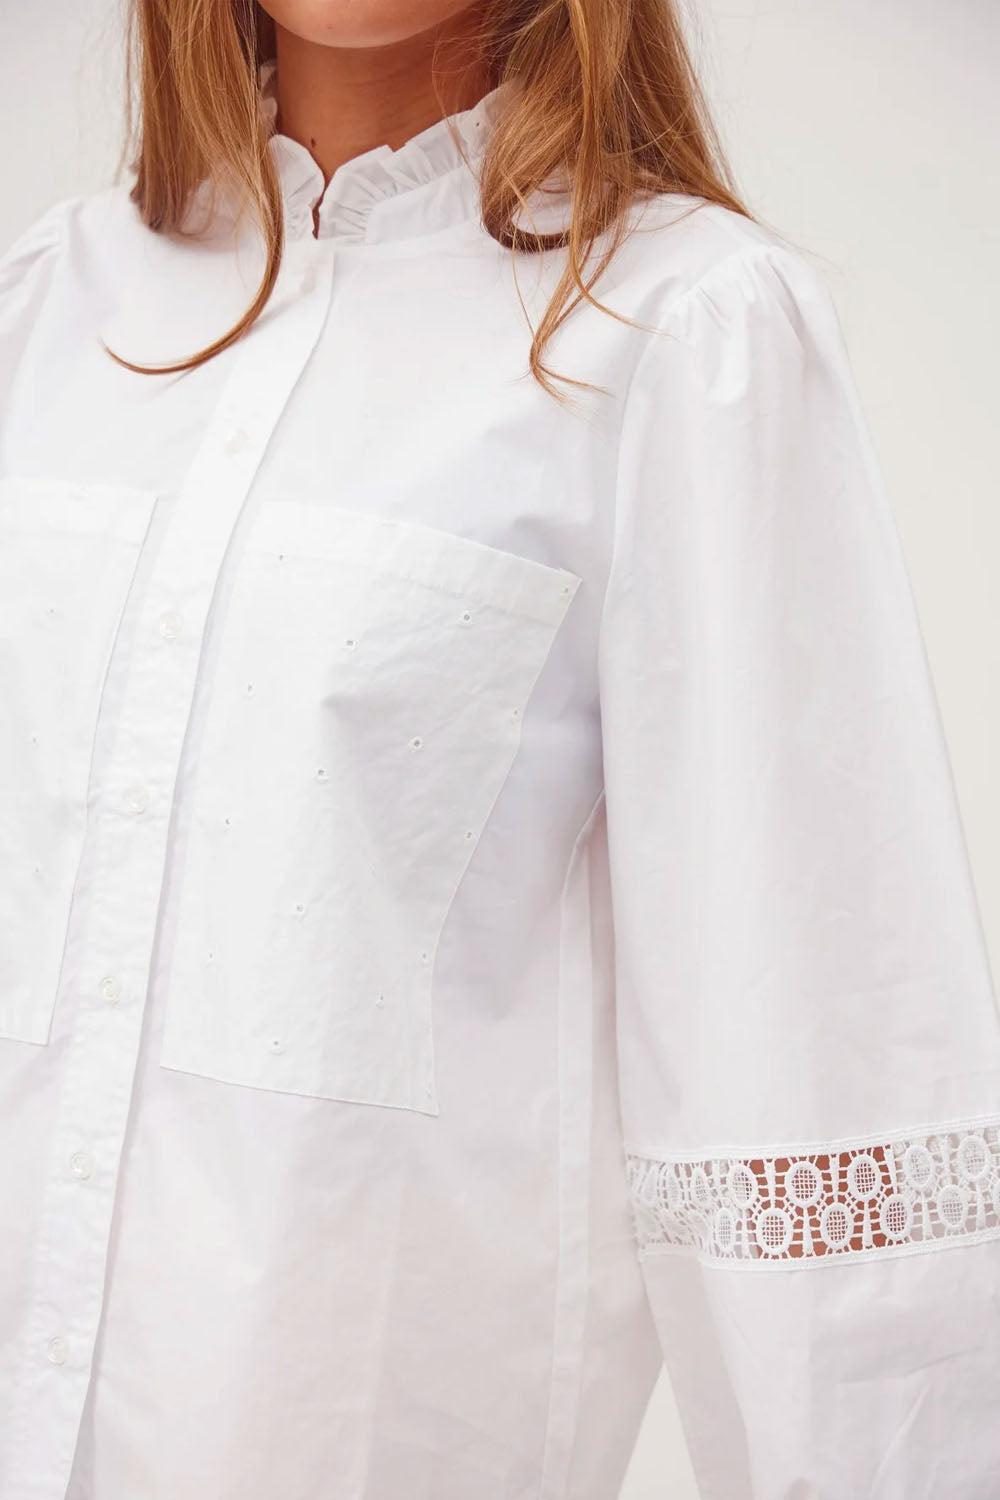 Tiffany Shirt White